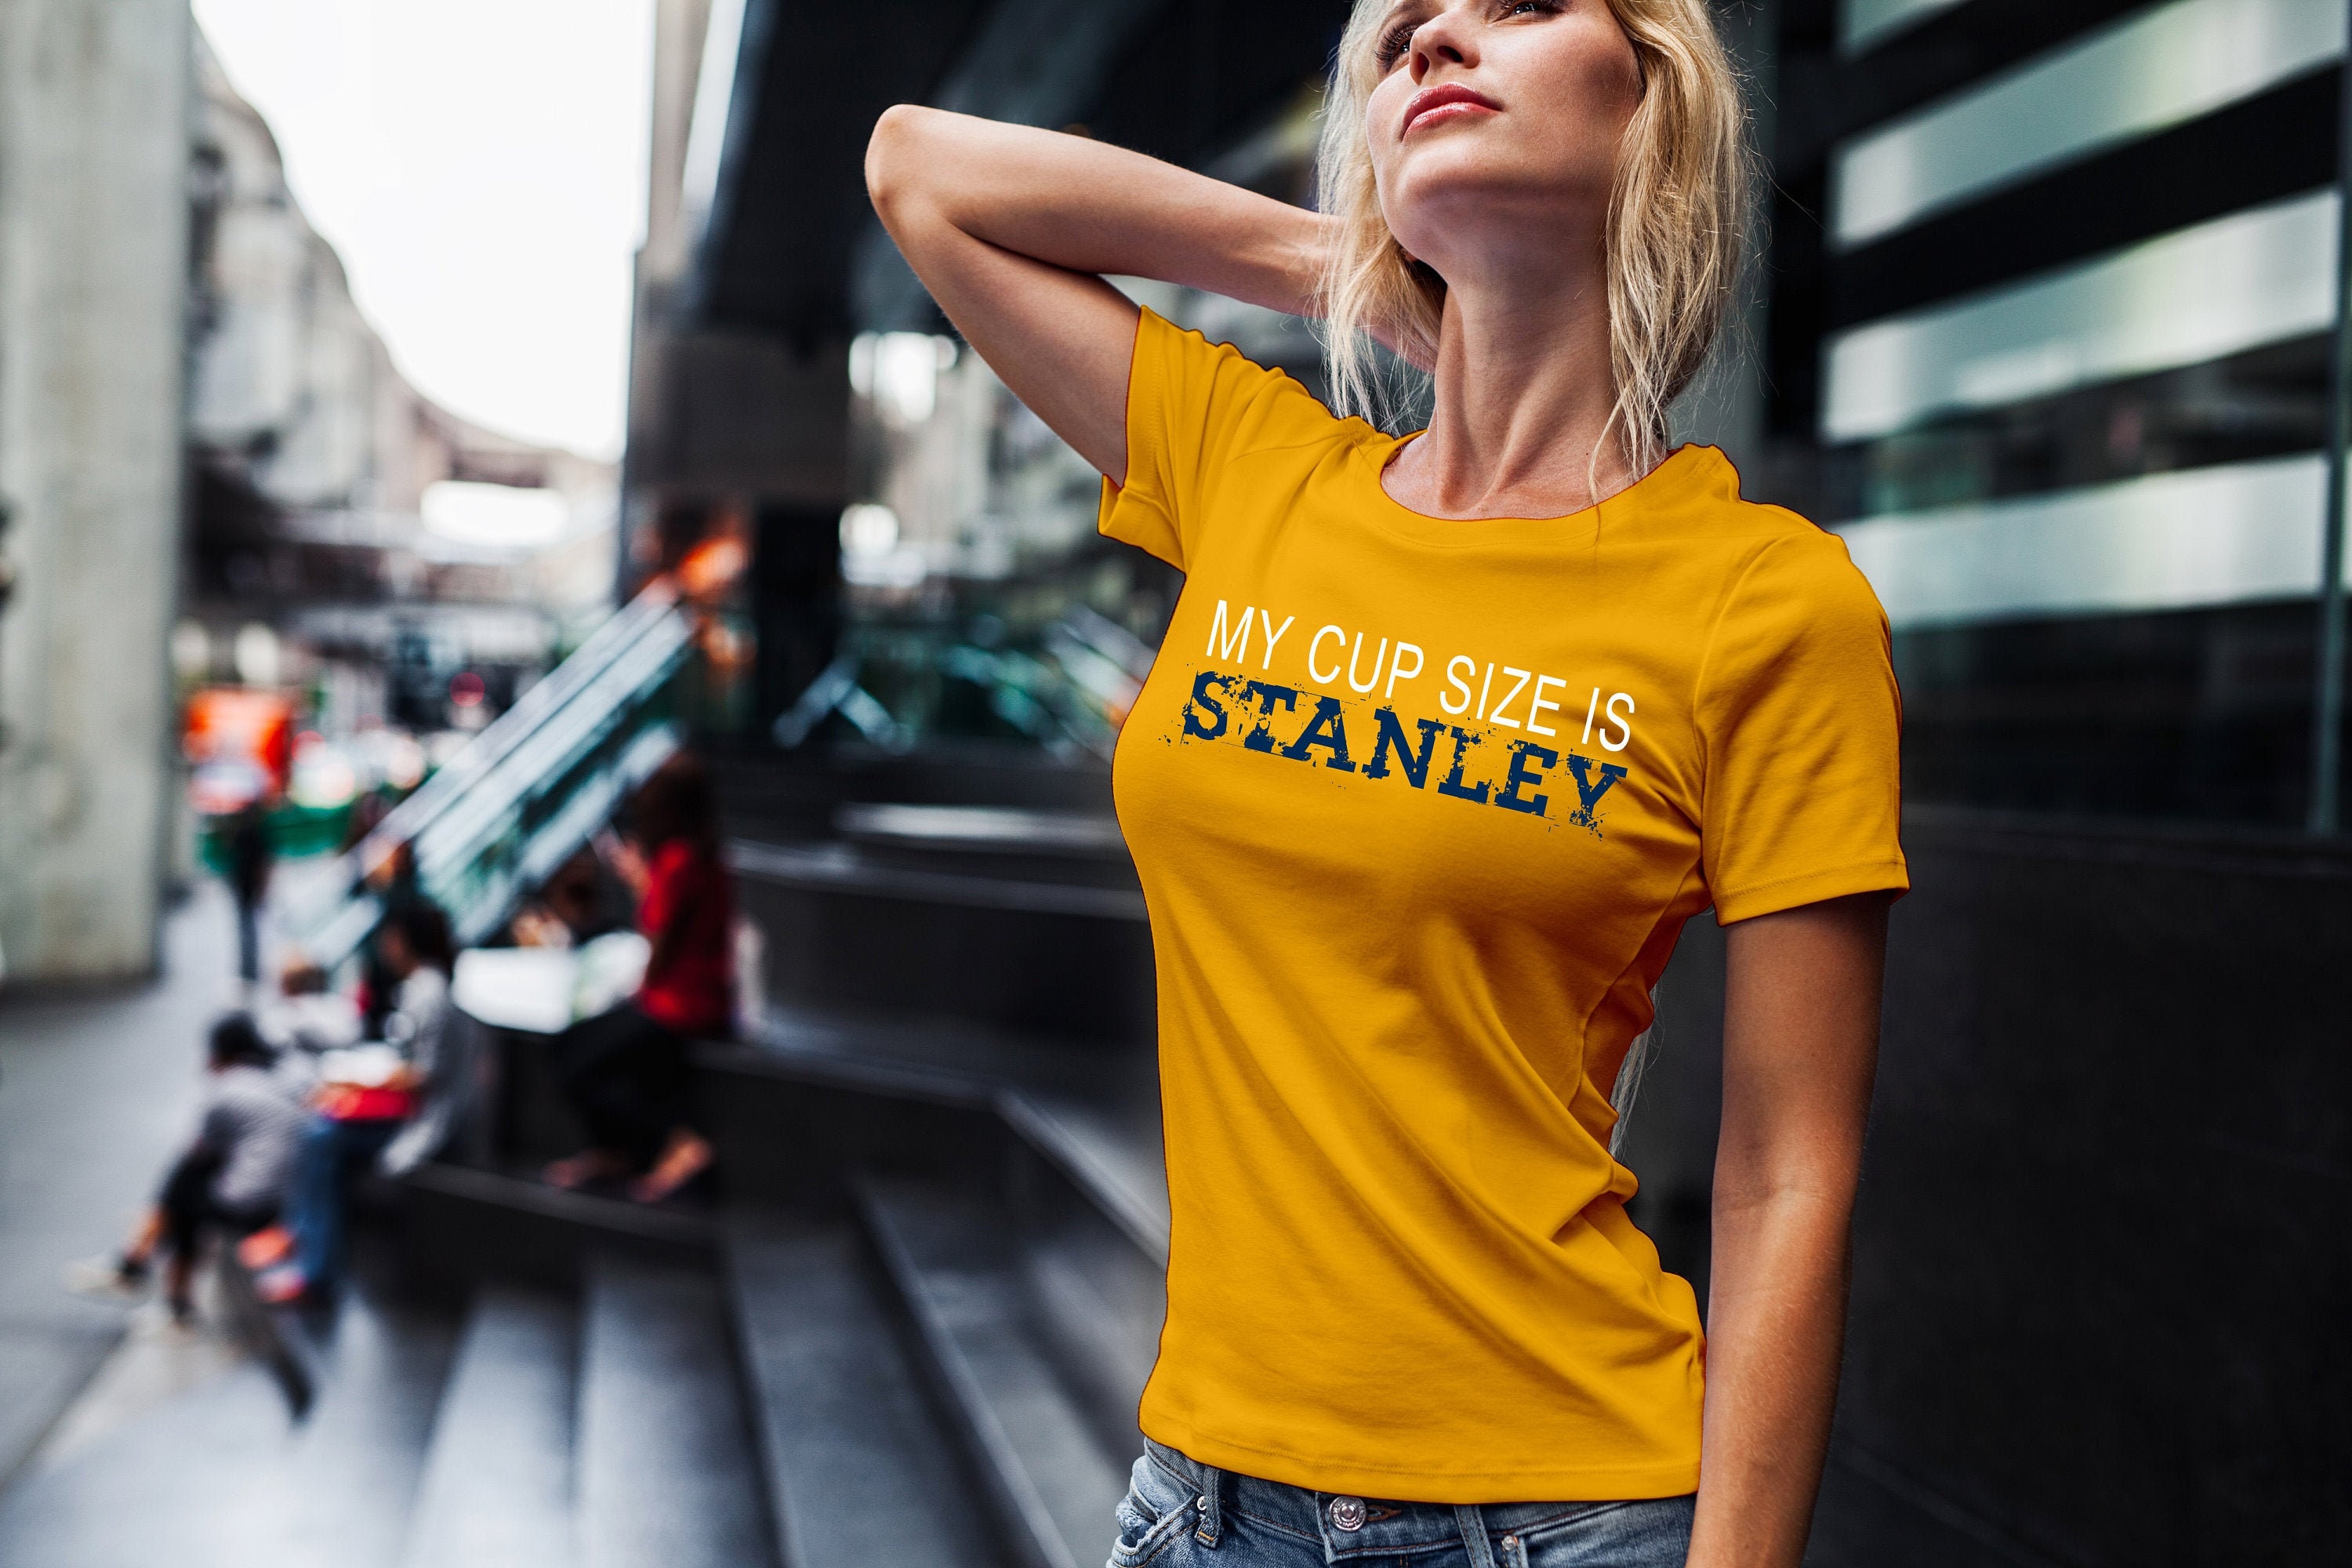 NHL Nashville Predators Mickey Mouse Disney Hockey T Shirt Youth T-Shirt